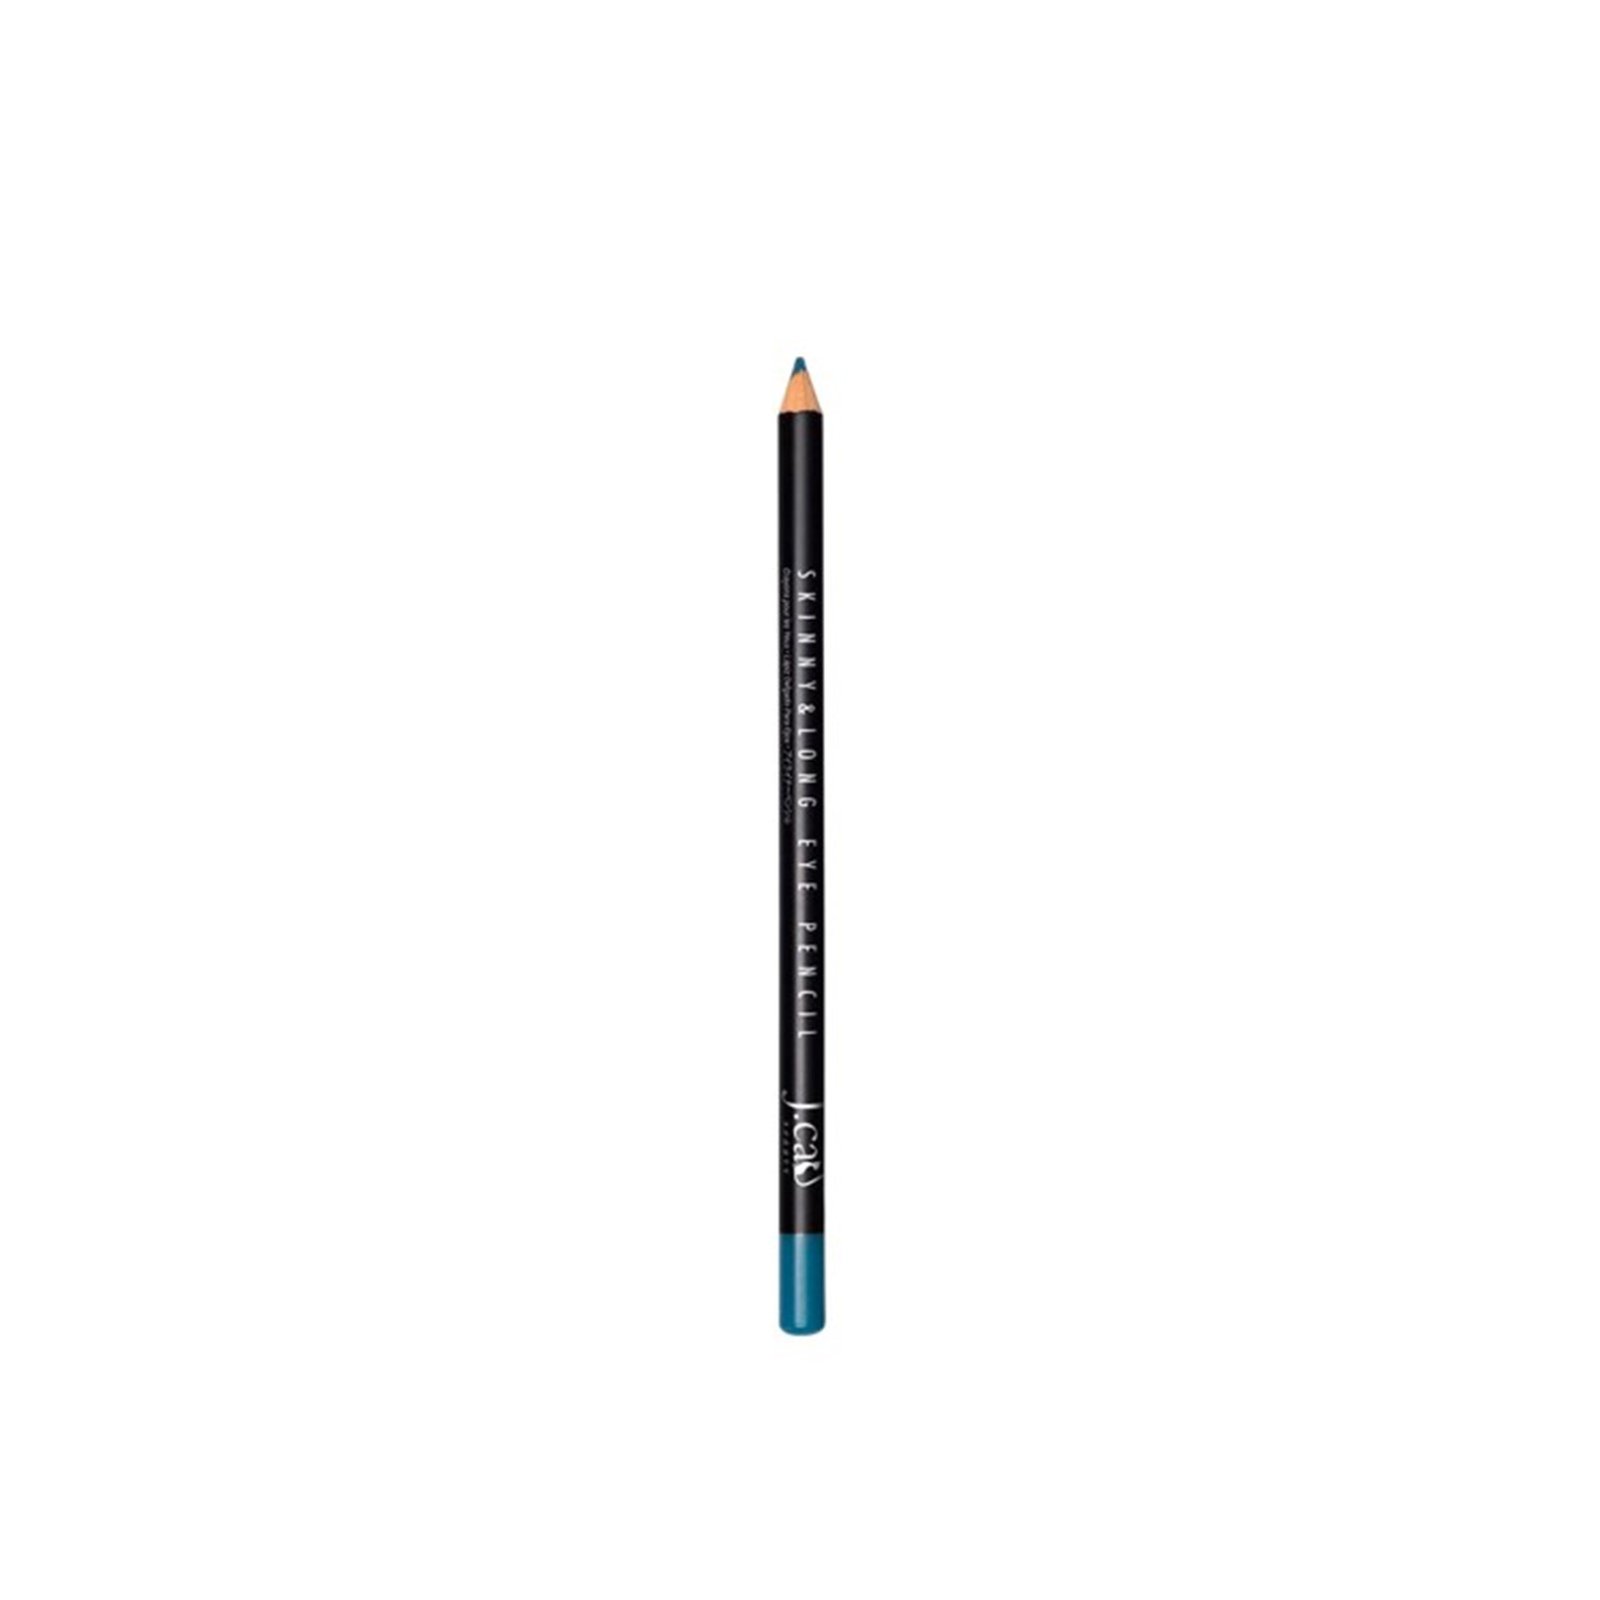 J.Cat Skinny & Long Eye Pencil 103 Dodger Blue 2g (0.08 oz)